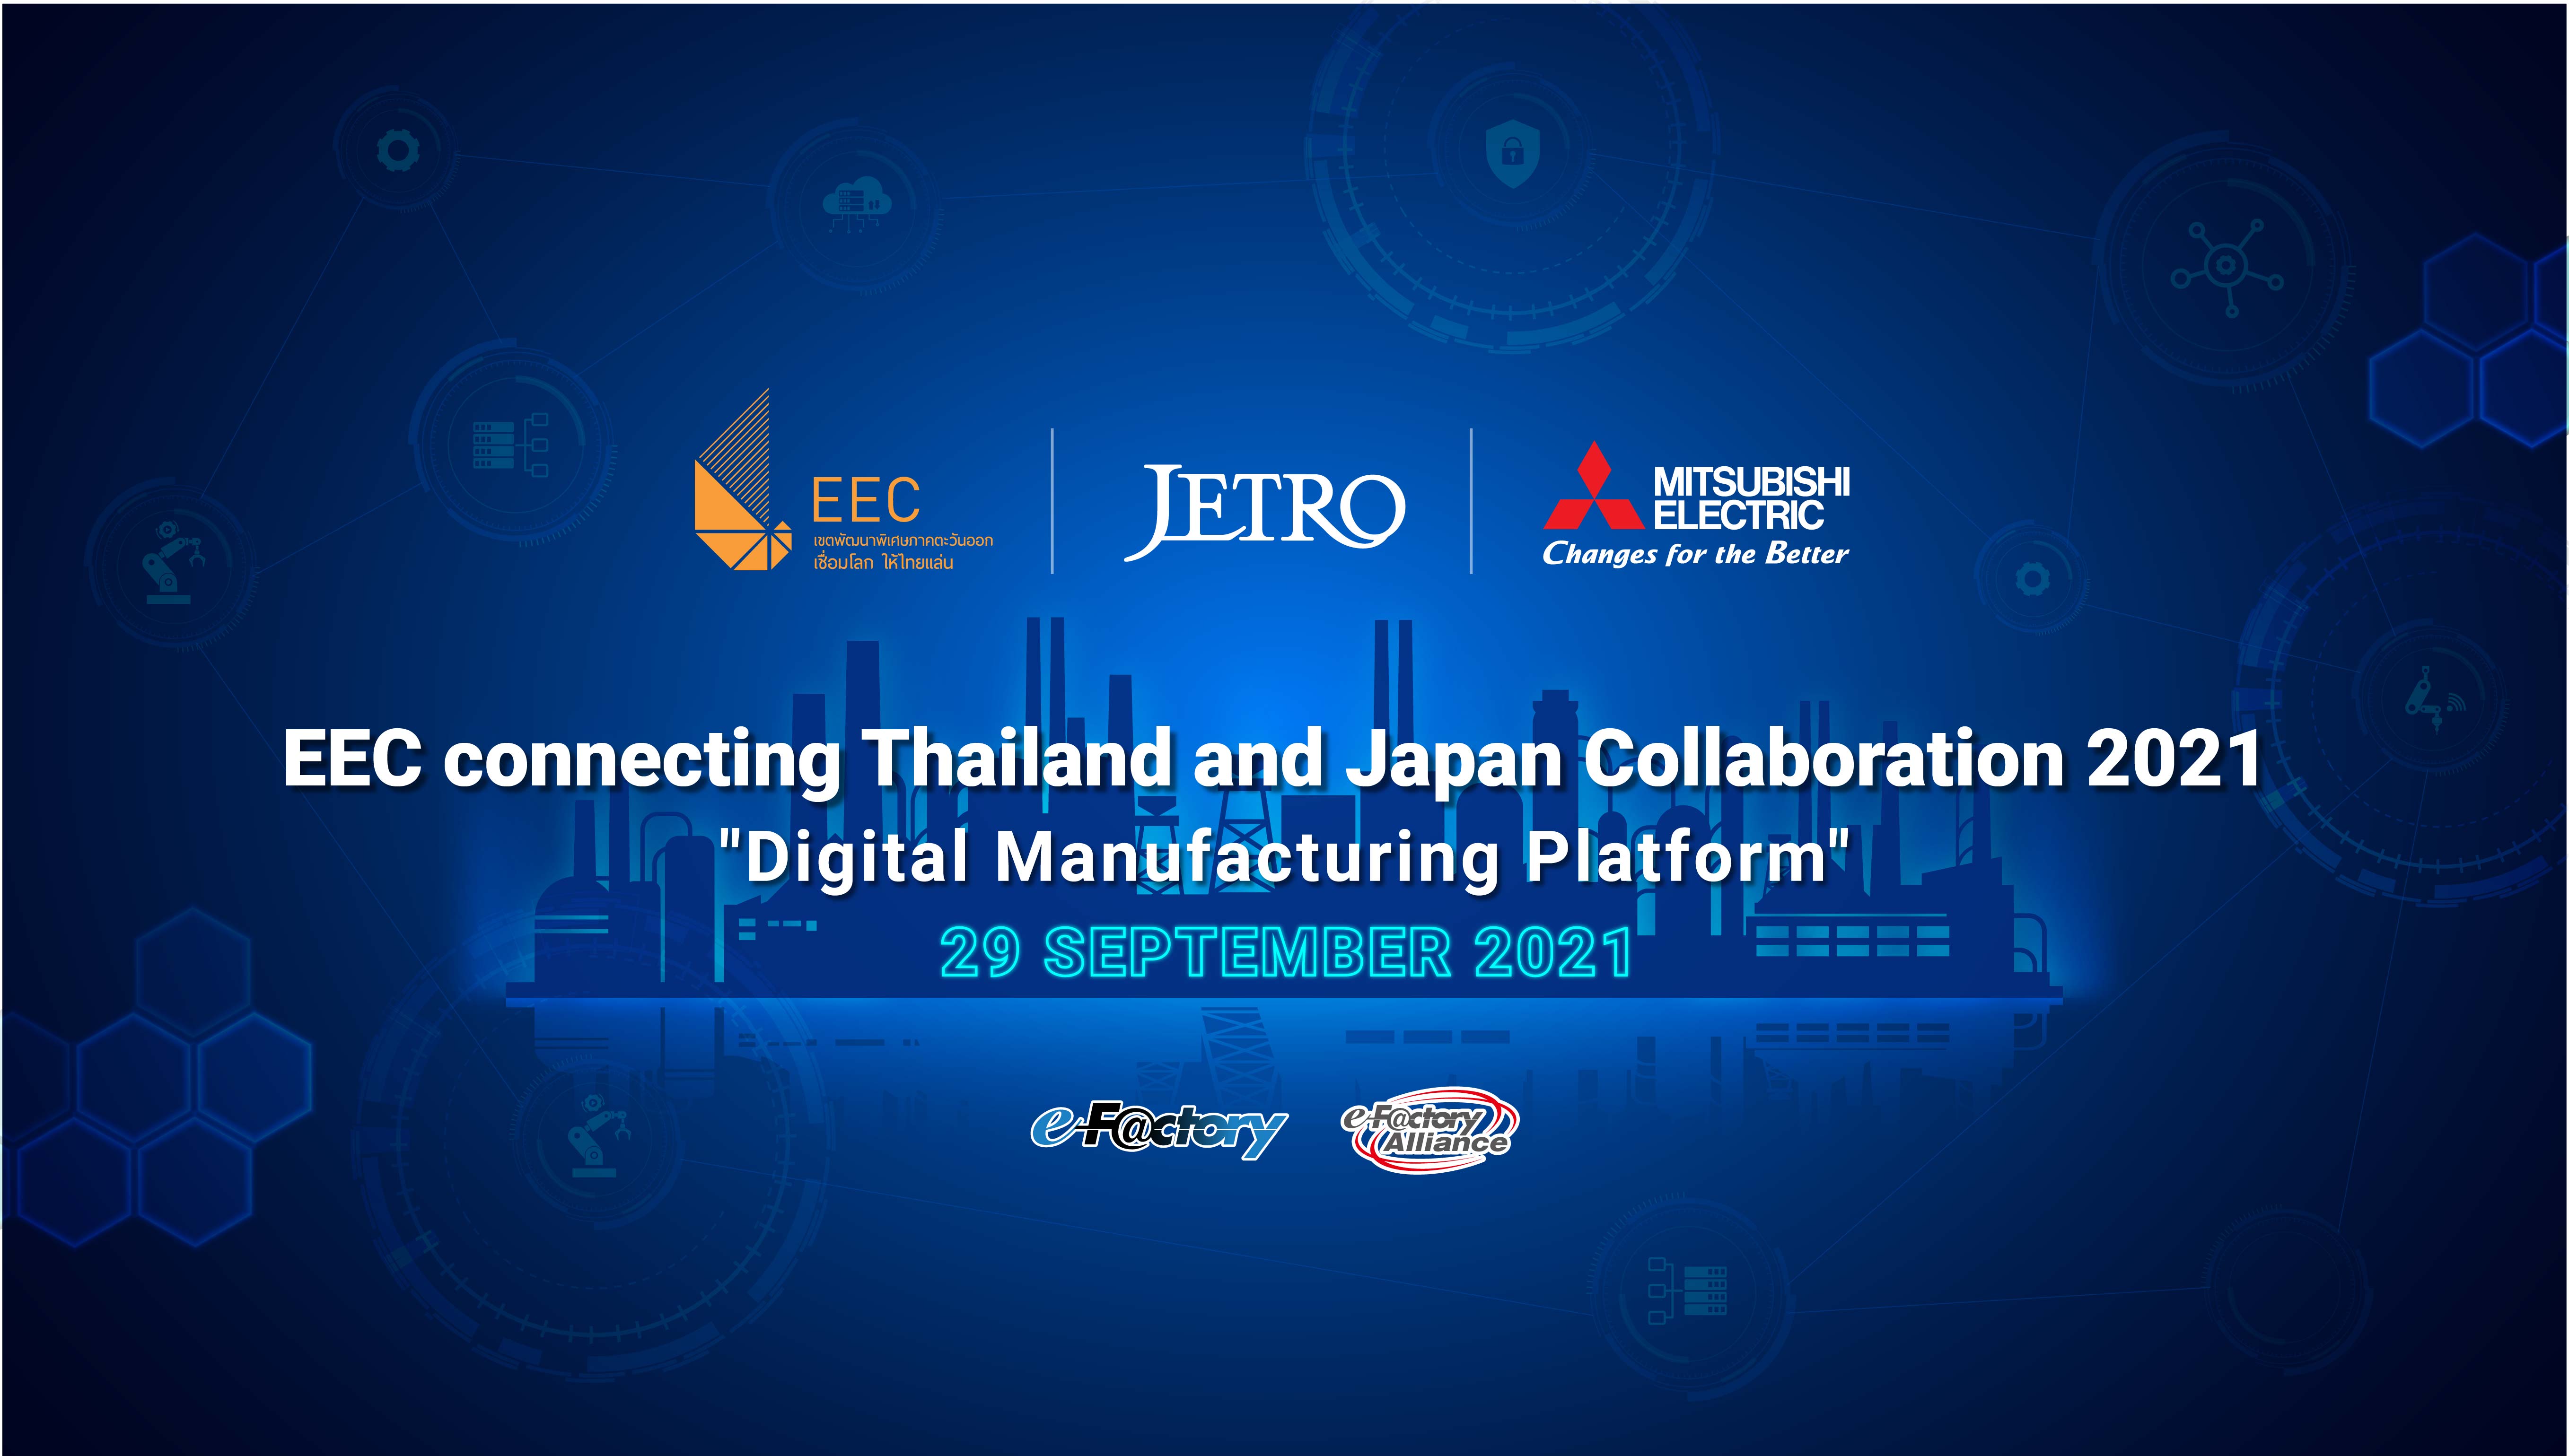 Mitsubishi Electric และ EEC จัด Virtual Conference พร้อมดันอุตสาหกรรม 4.0